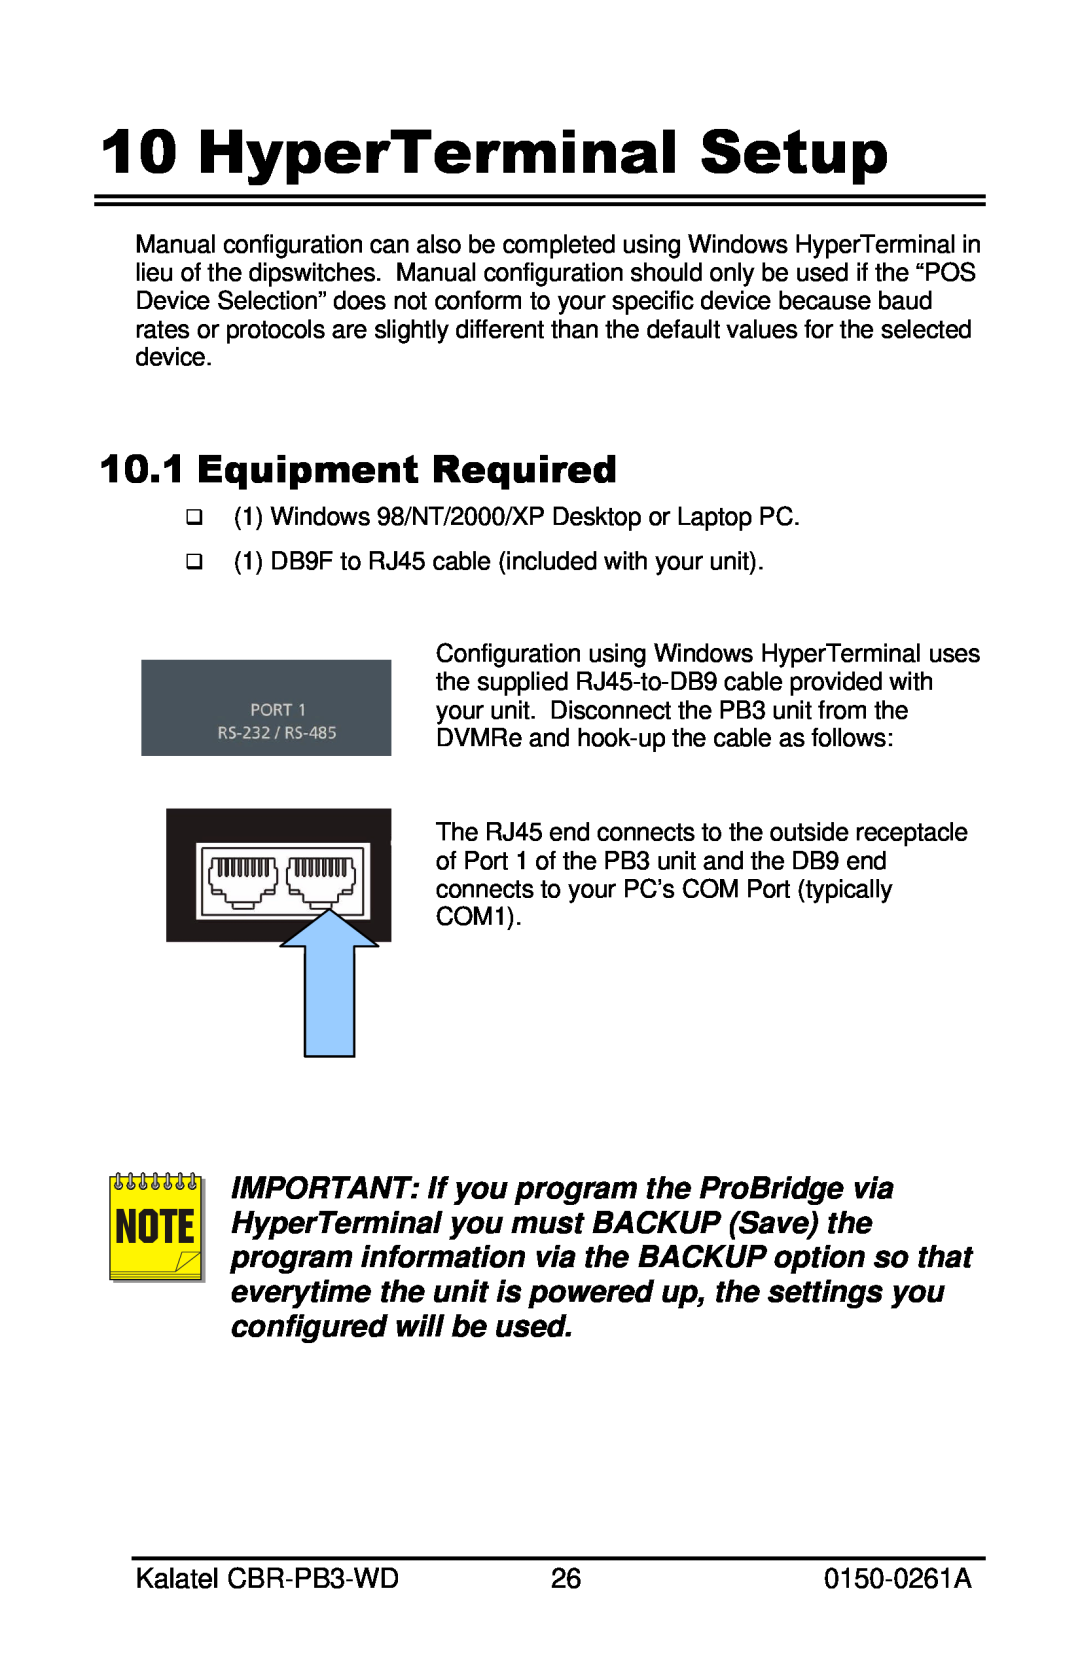 GE CBR-PB3-WD installation manual HyperTerminal Setup, Equipment Required 